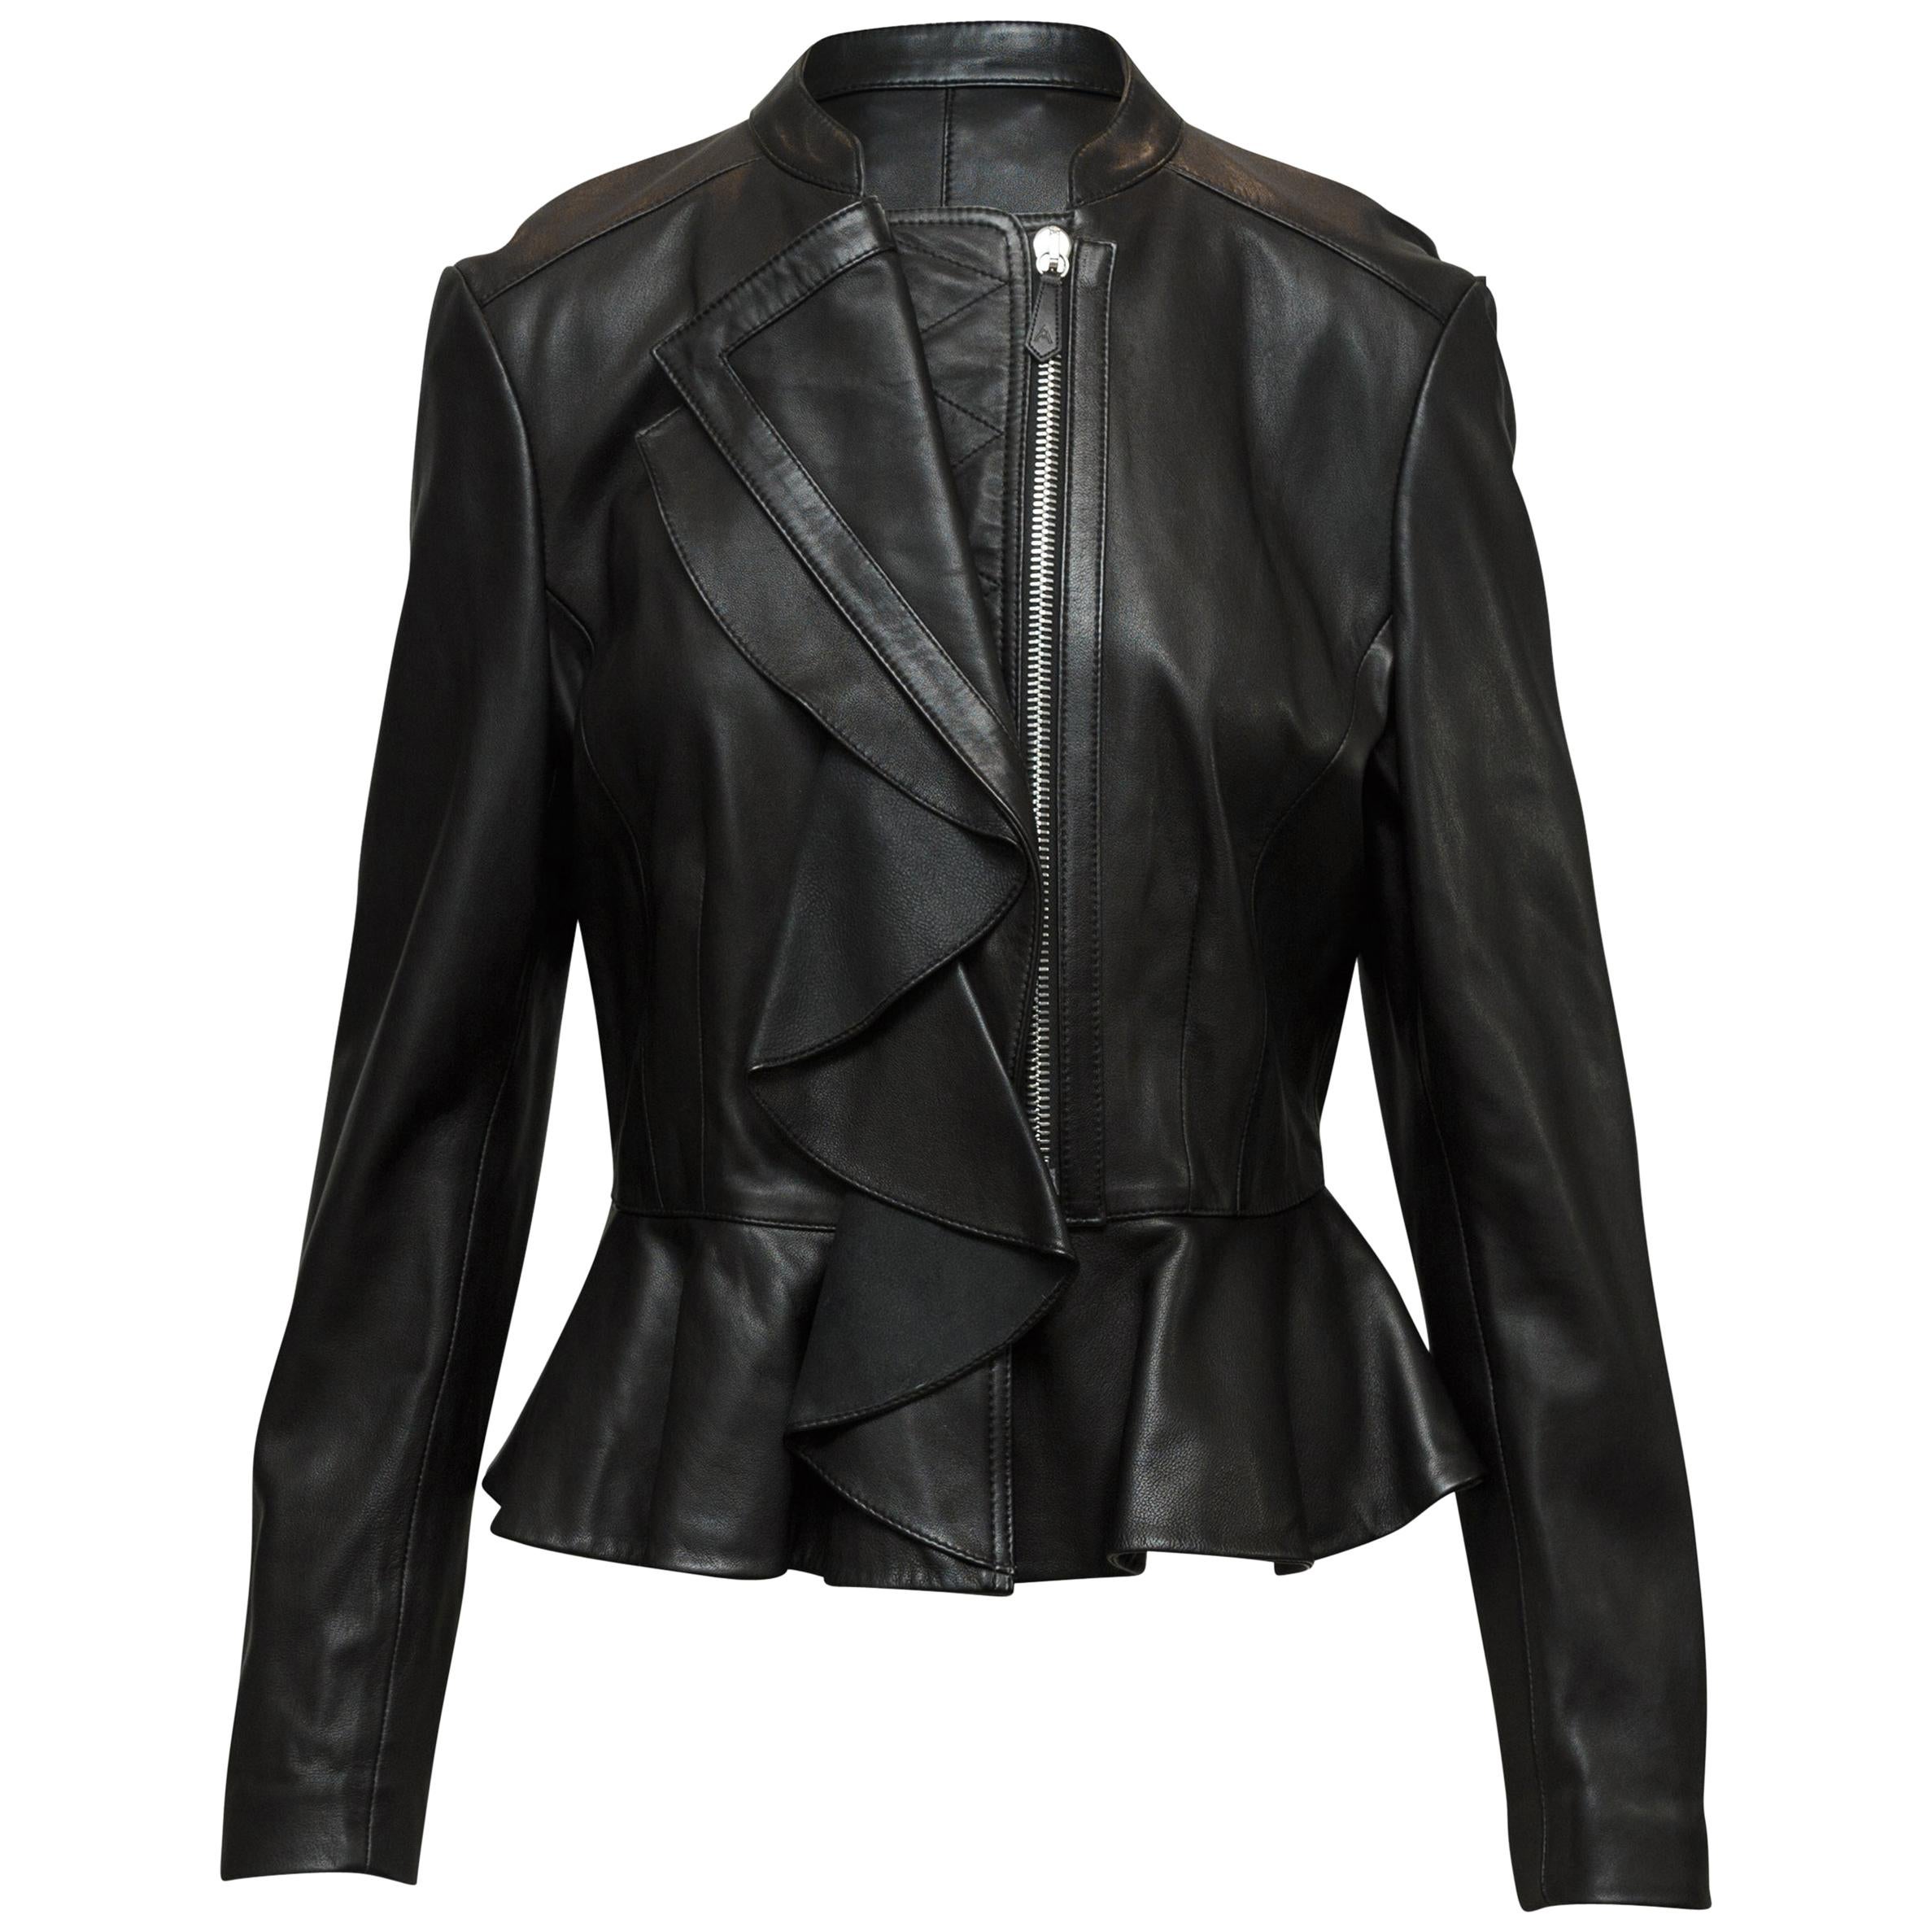 Altuzarra Black Fitted Leather Ruffle-Trimmed Jacket